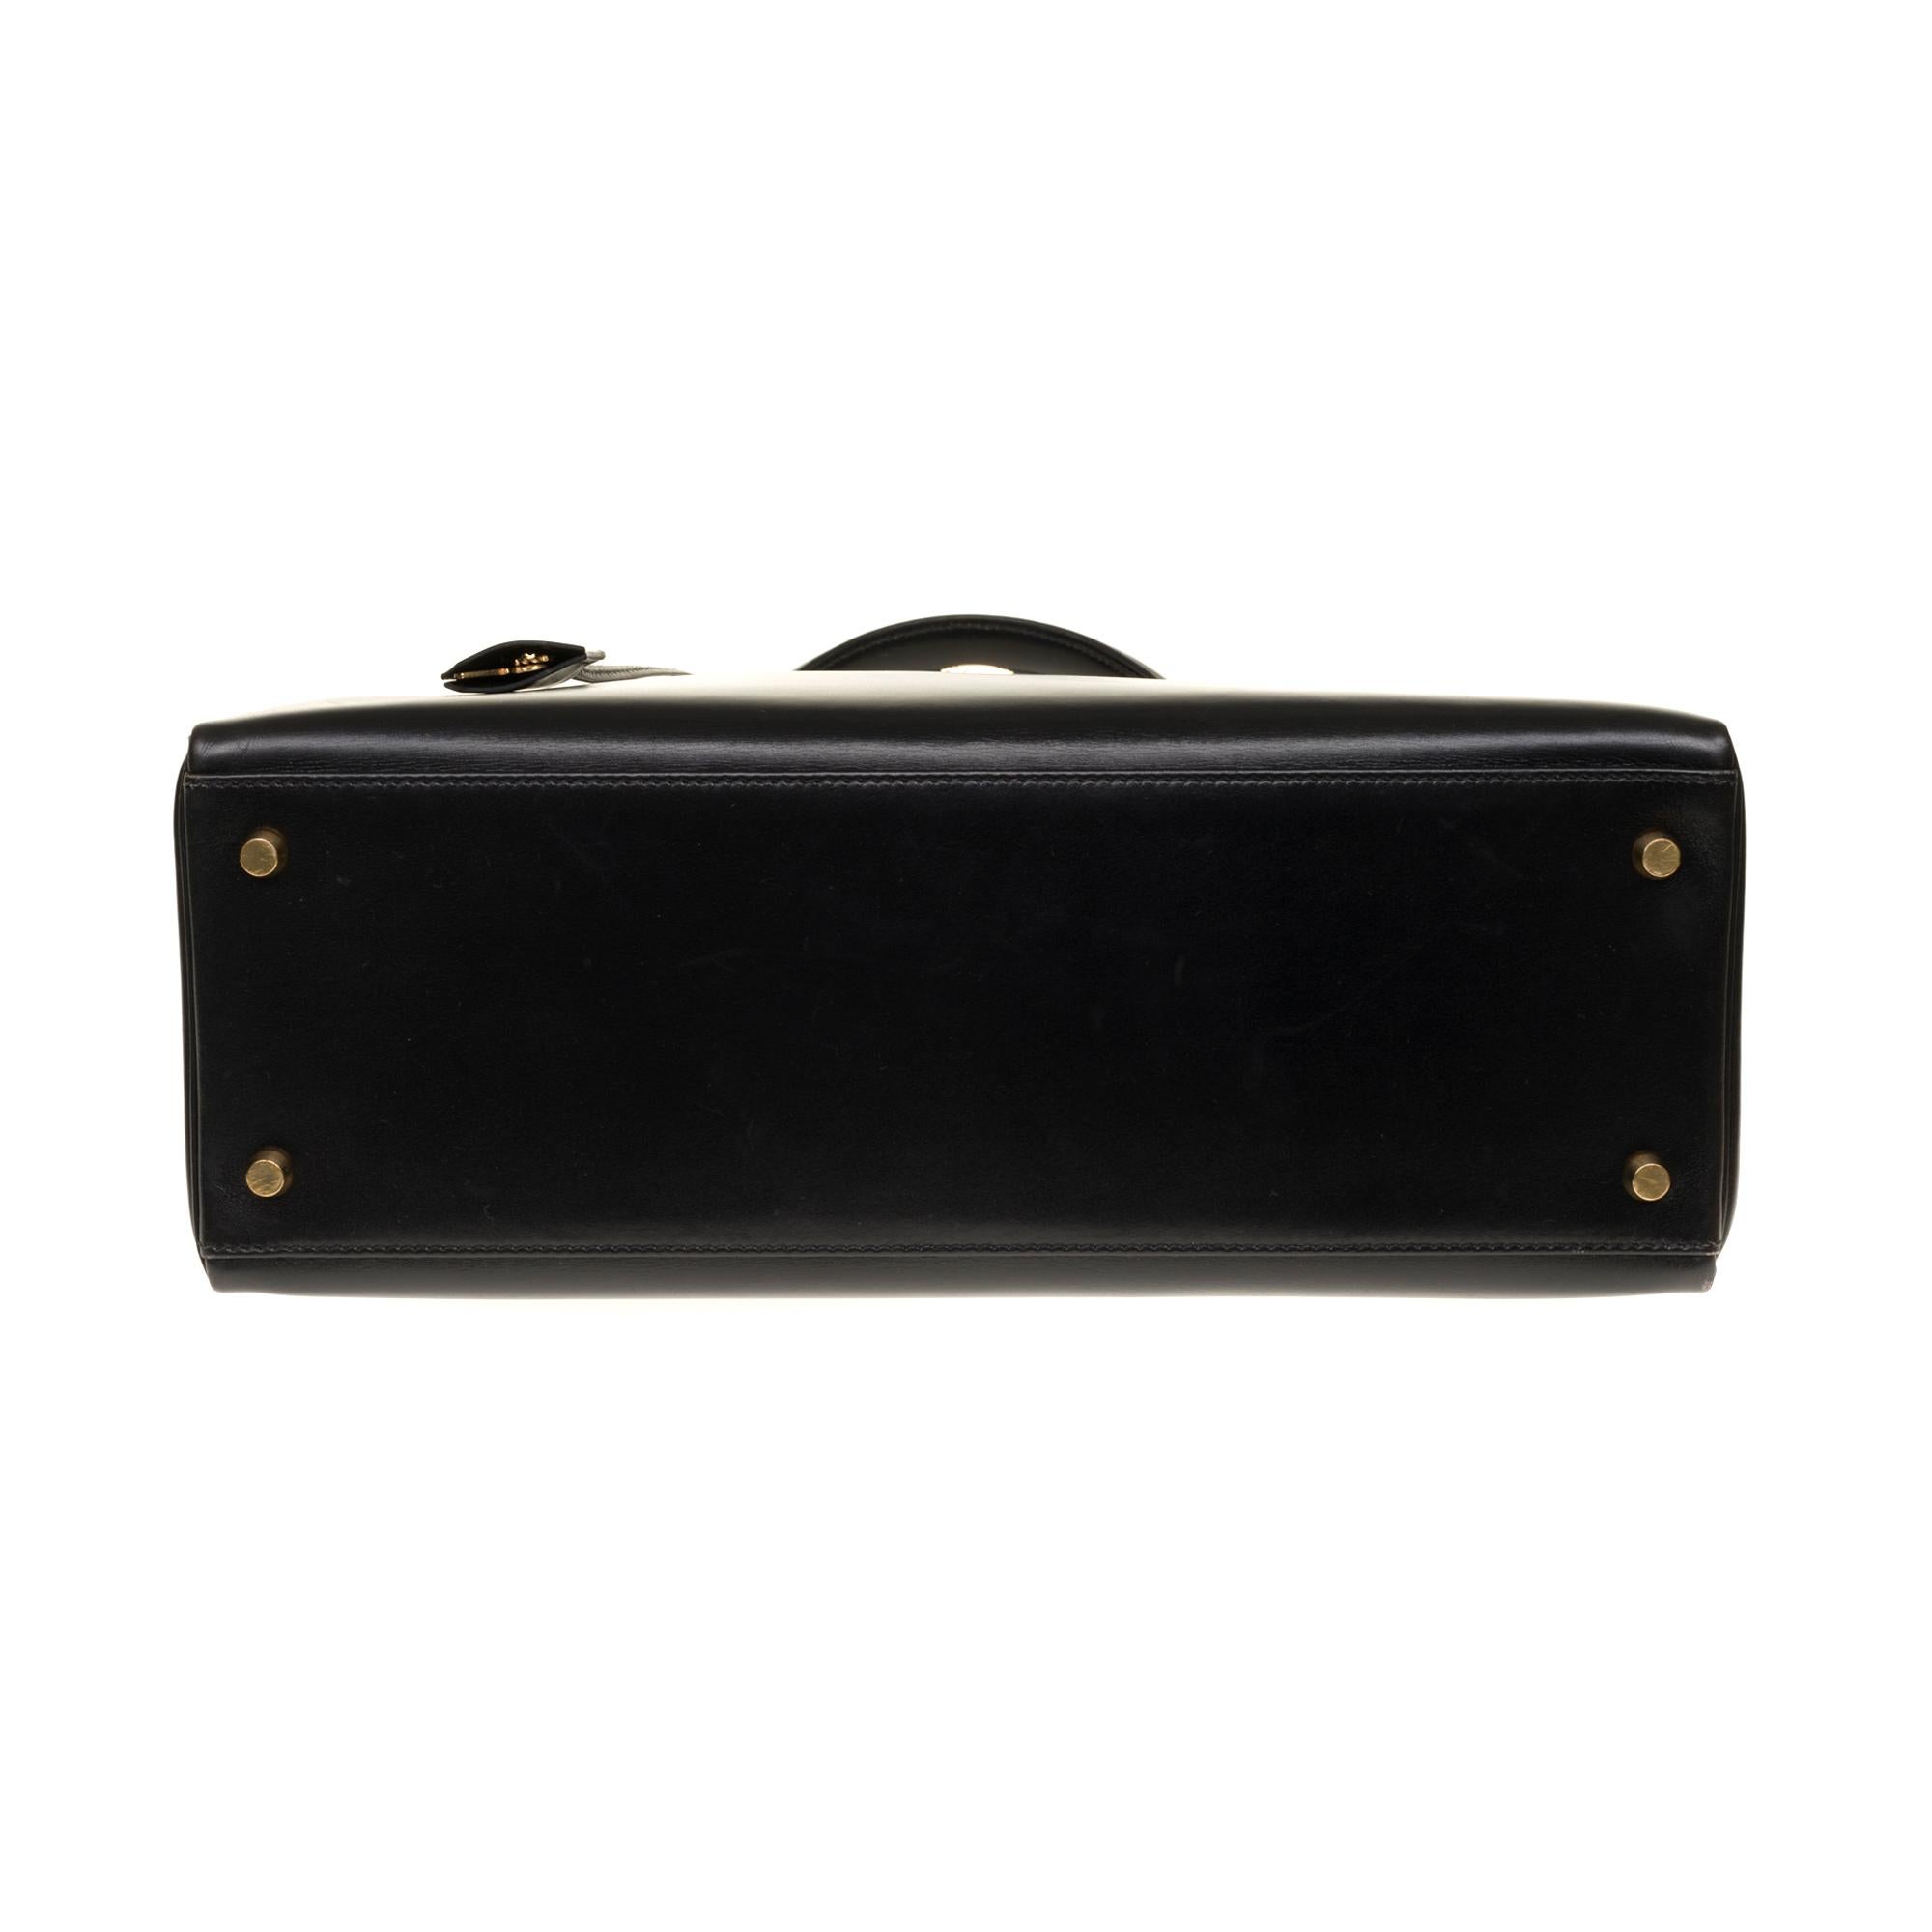 Rare Hermès Kelly 35 retourné handbag with strap in Black Calf leather, GHW 2